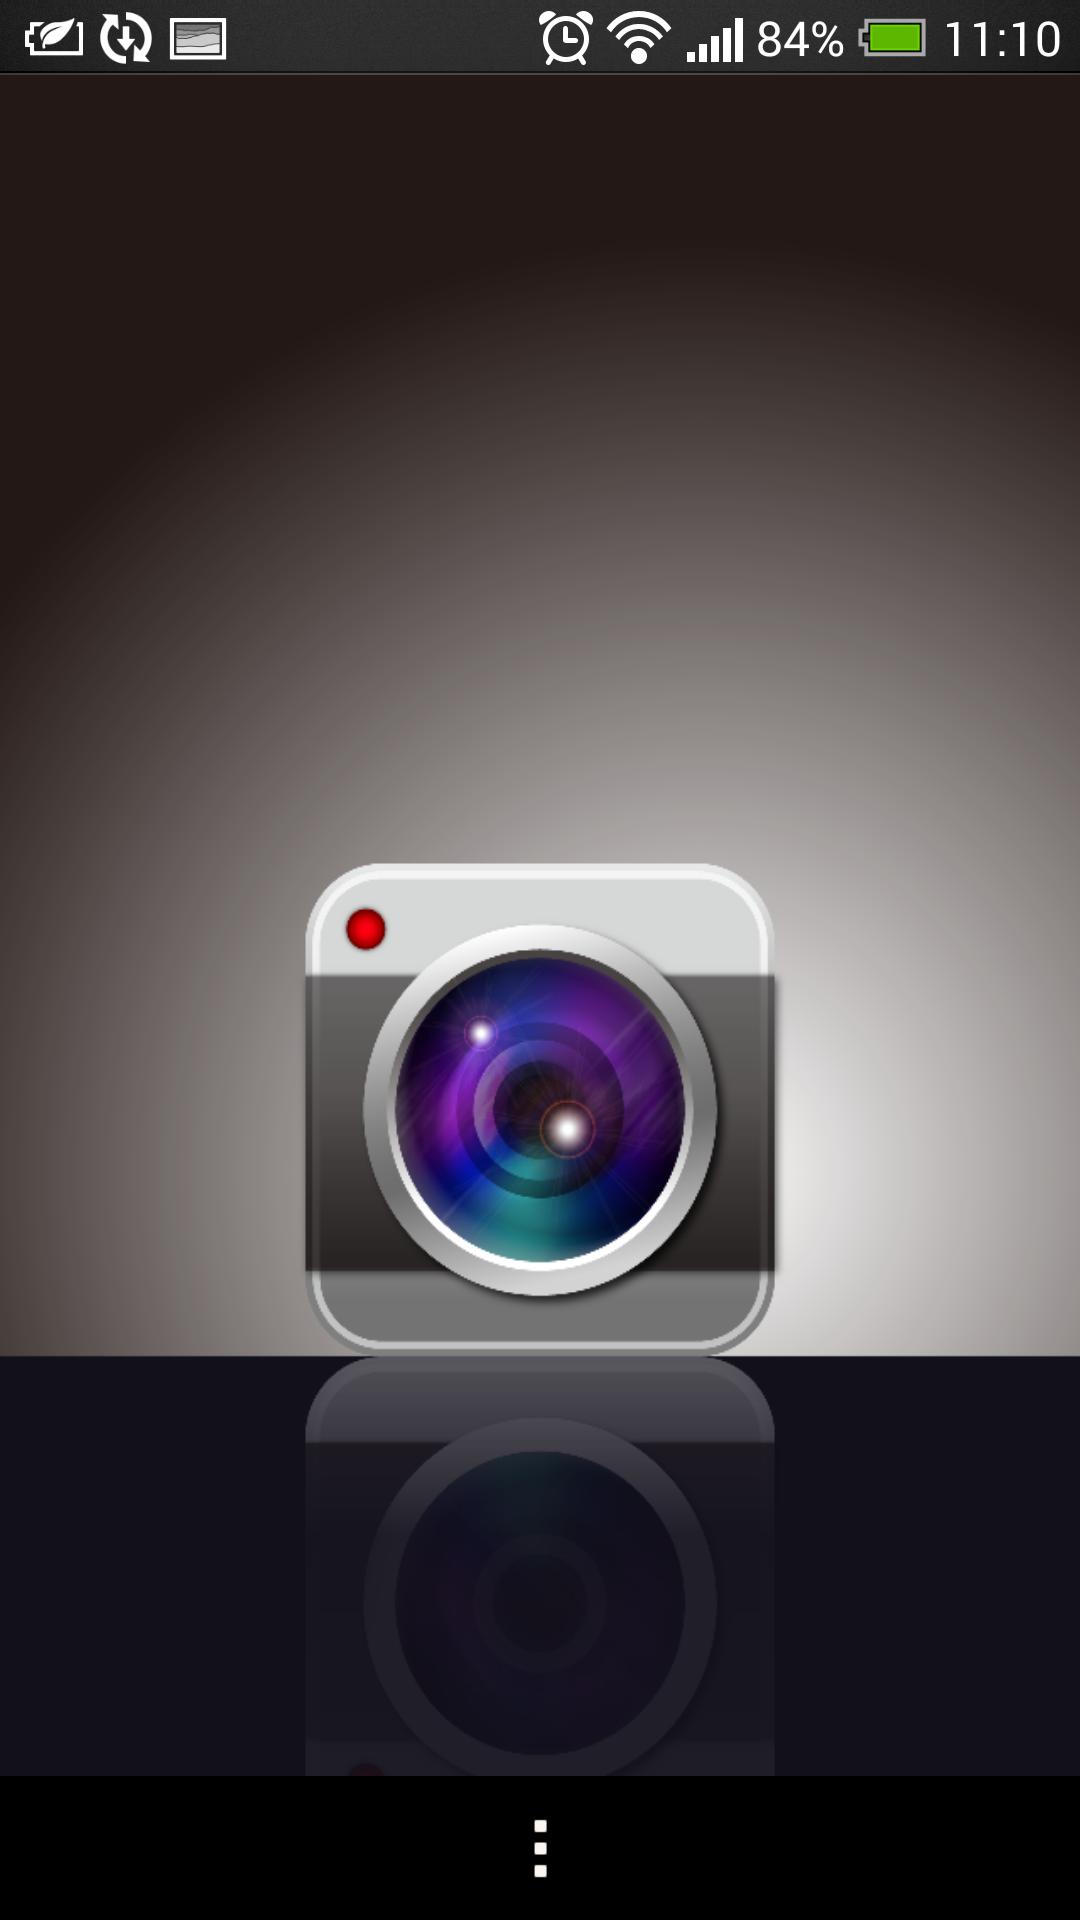 Значок камеры на андроиде. Приложение камера. Приложение камера для андроид. SMC камера. Камера иконка приложения андроид.